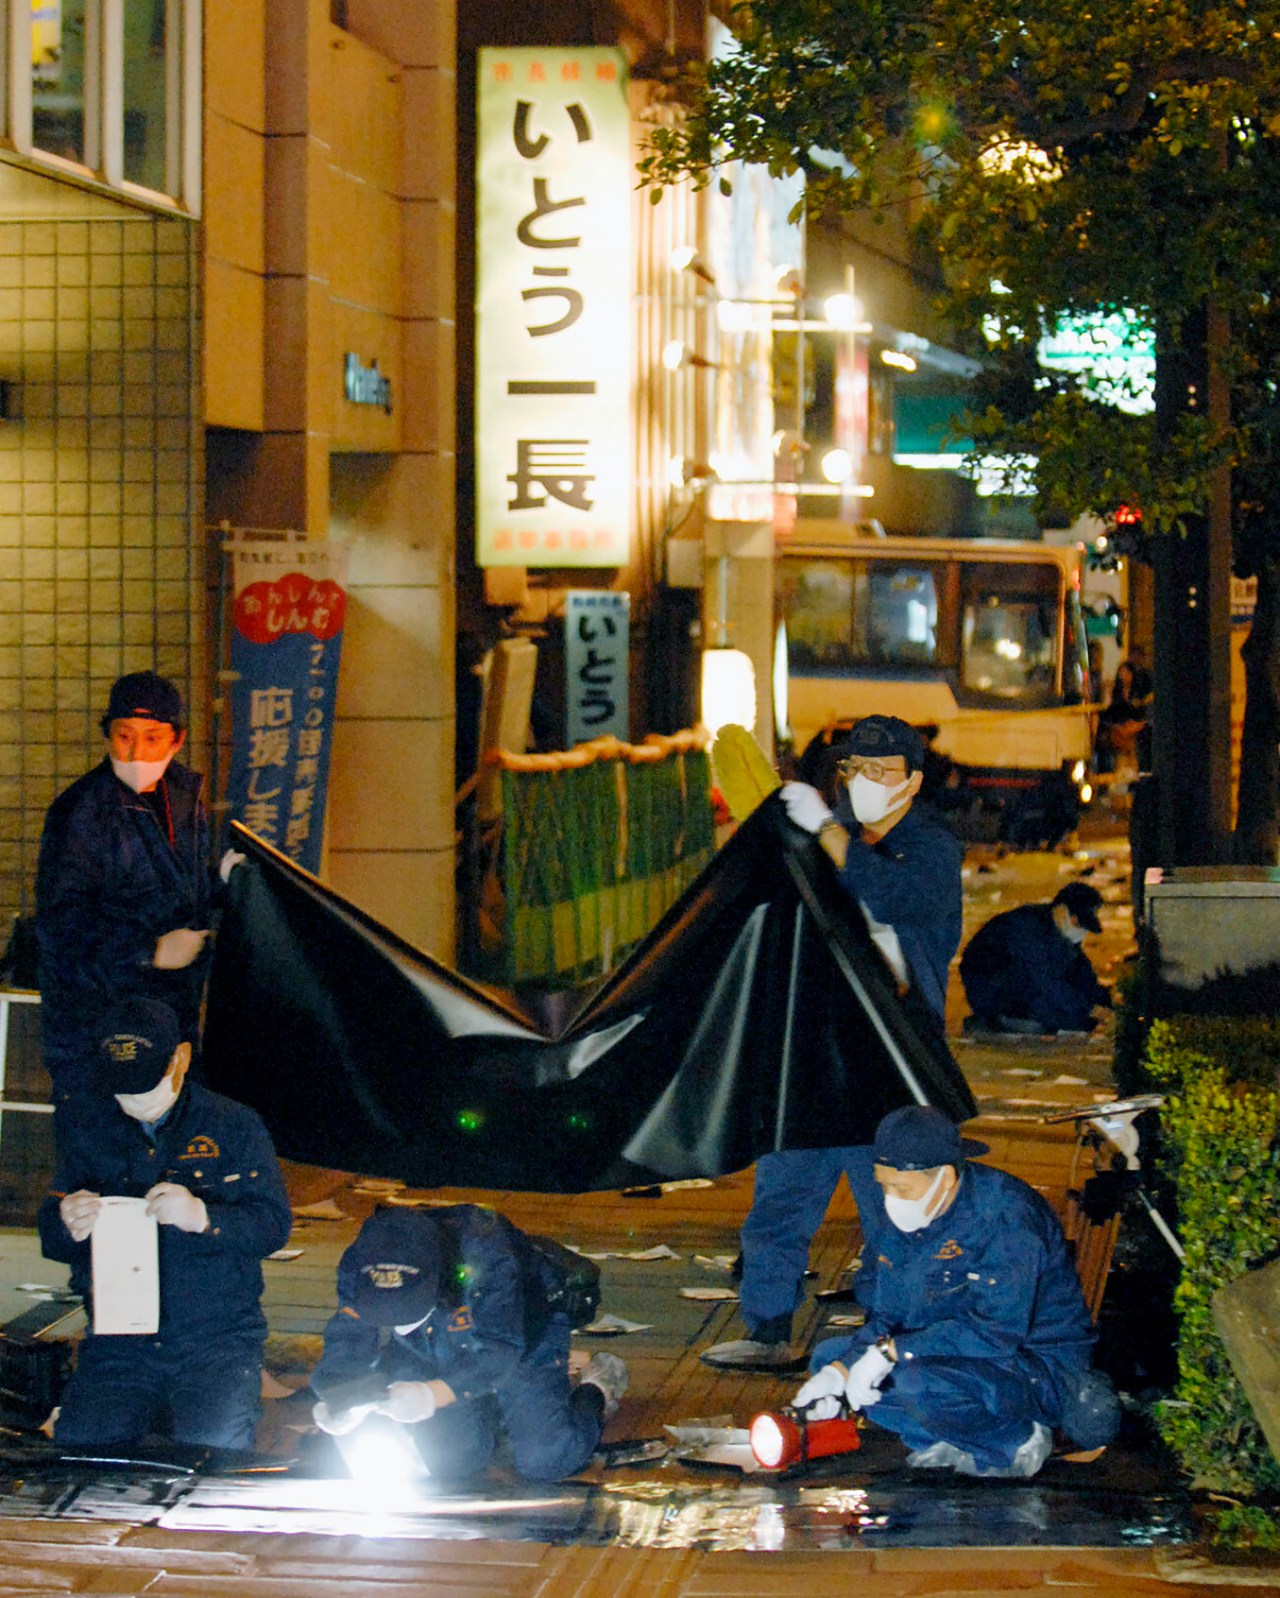 As Japans yakuza weakens, police focus shifts to unorganized crime hired via social media | KLRT [Video]